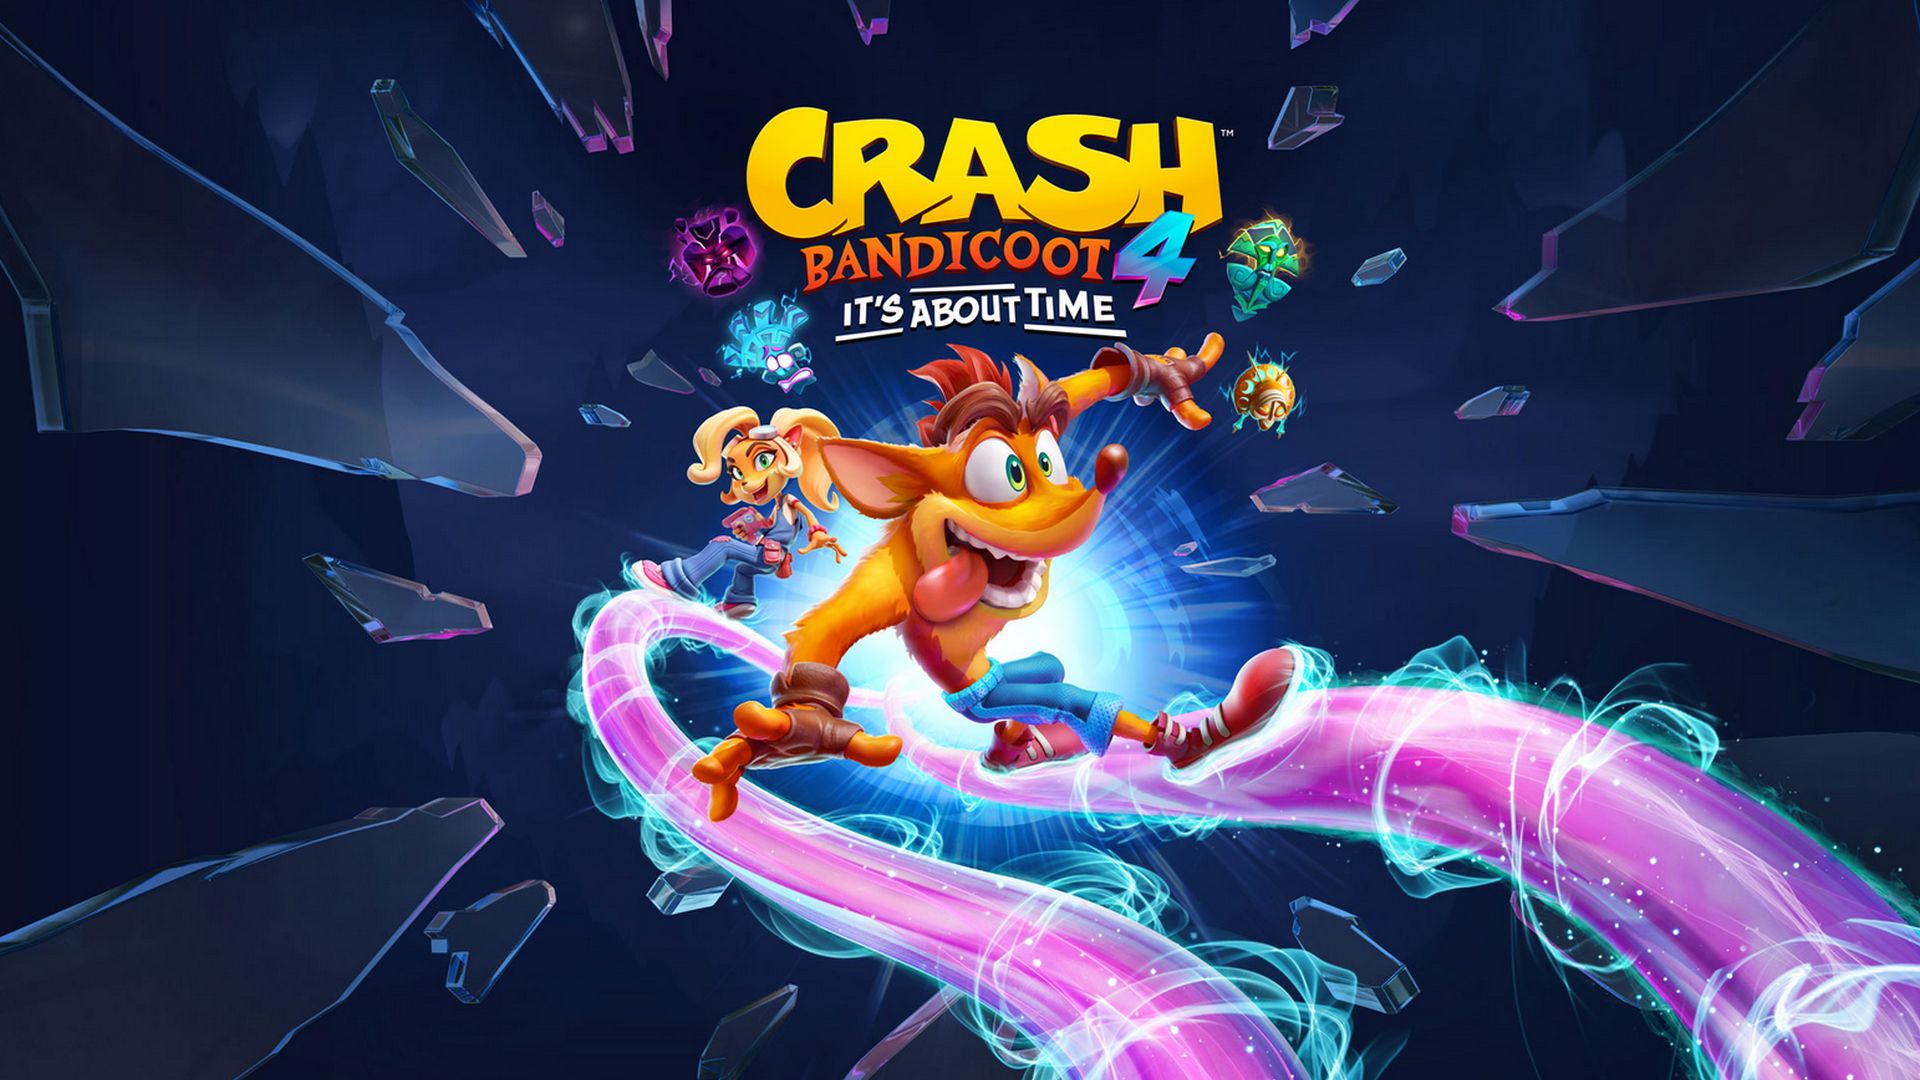 Crash Bandicoot 4 ጊዜው ነው።